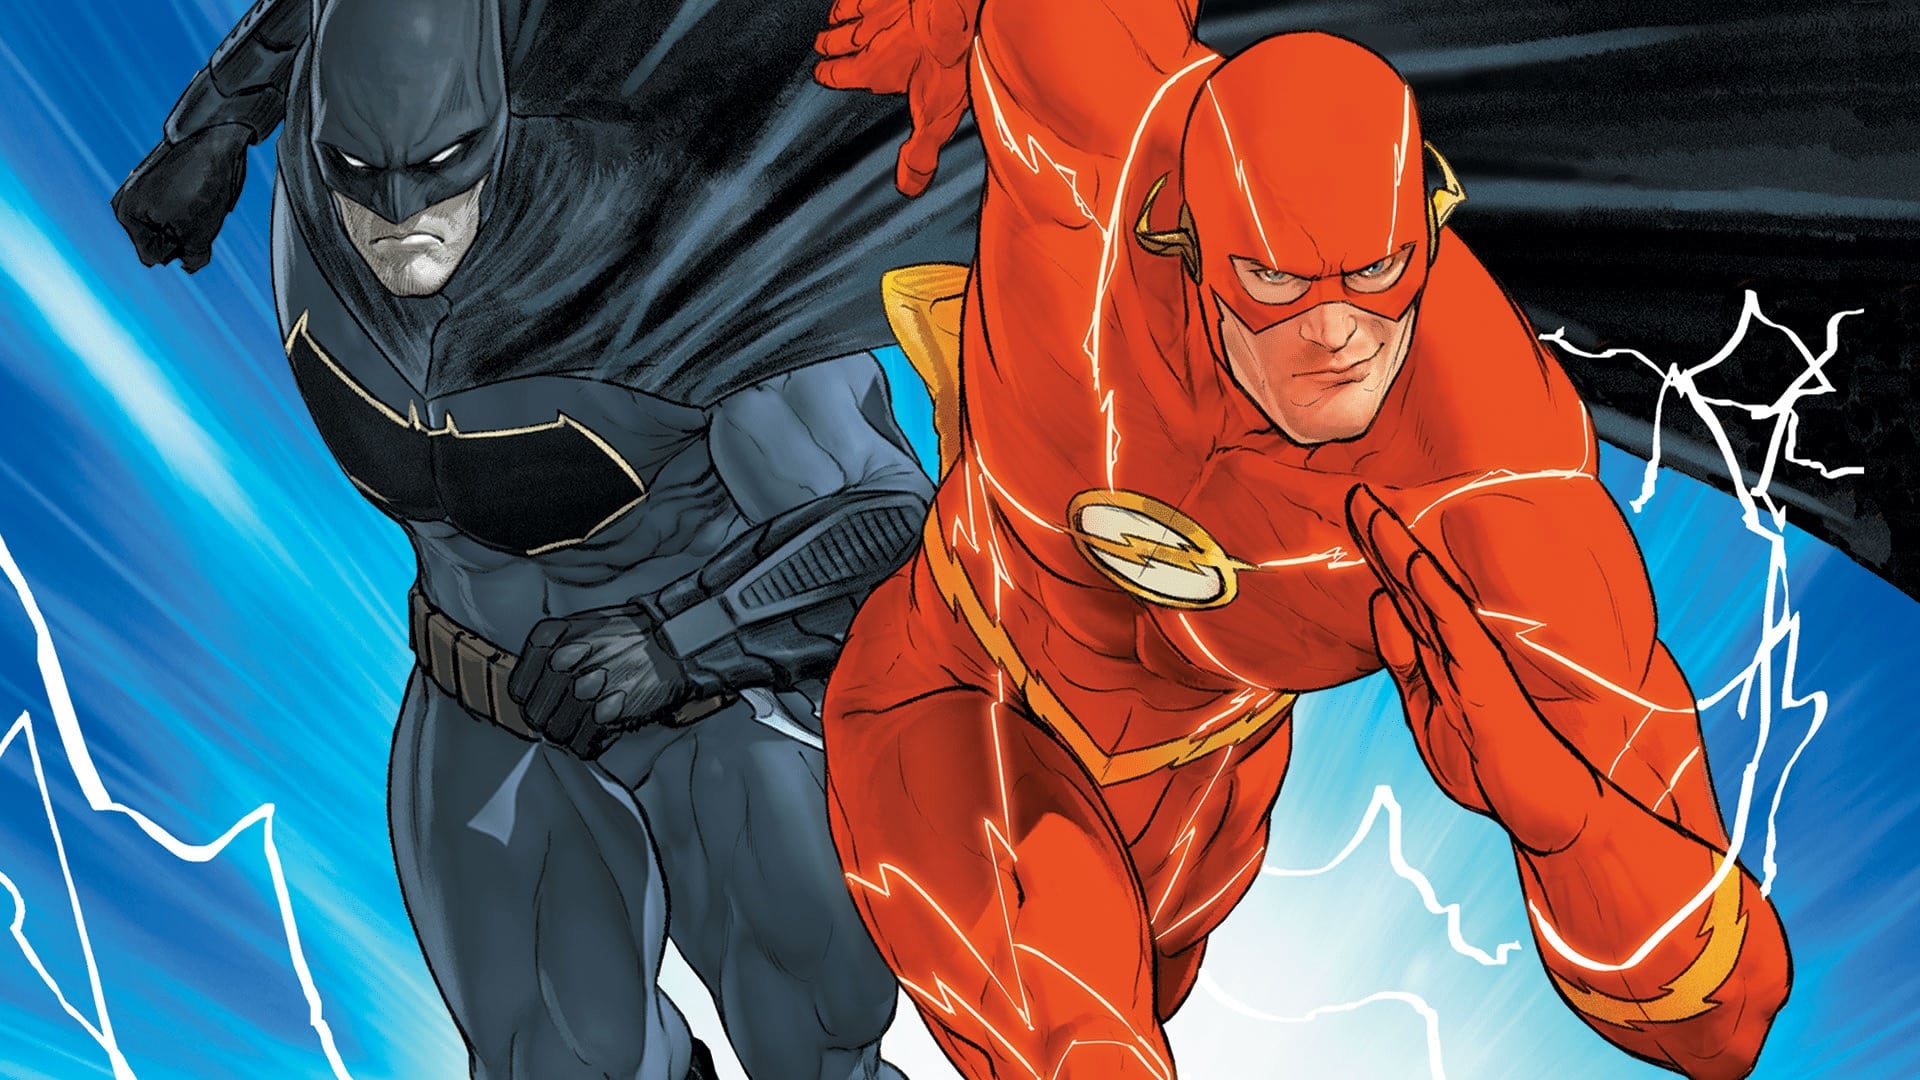 The Flash Faster Man Alive ainda deve ser publicada